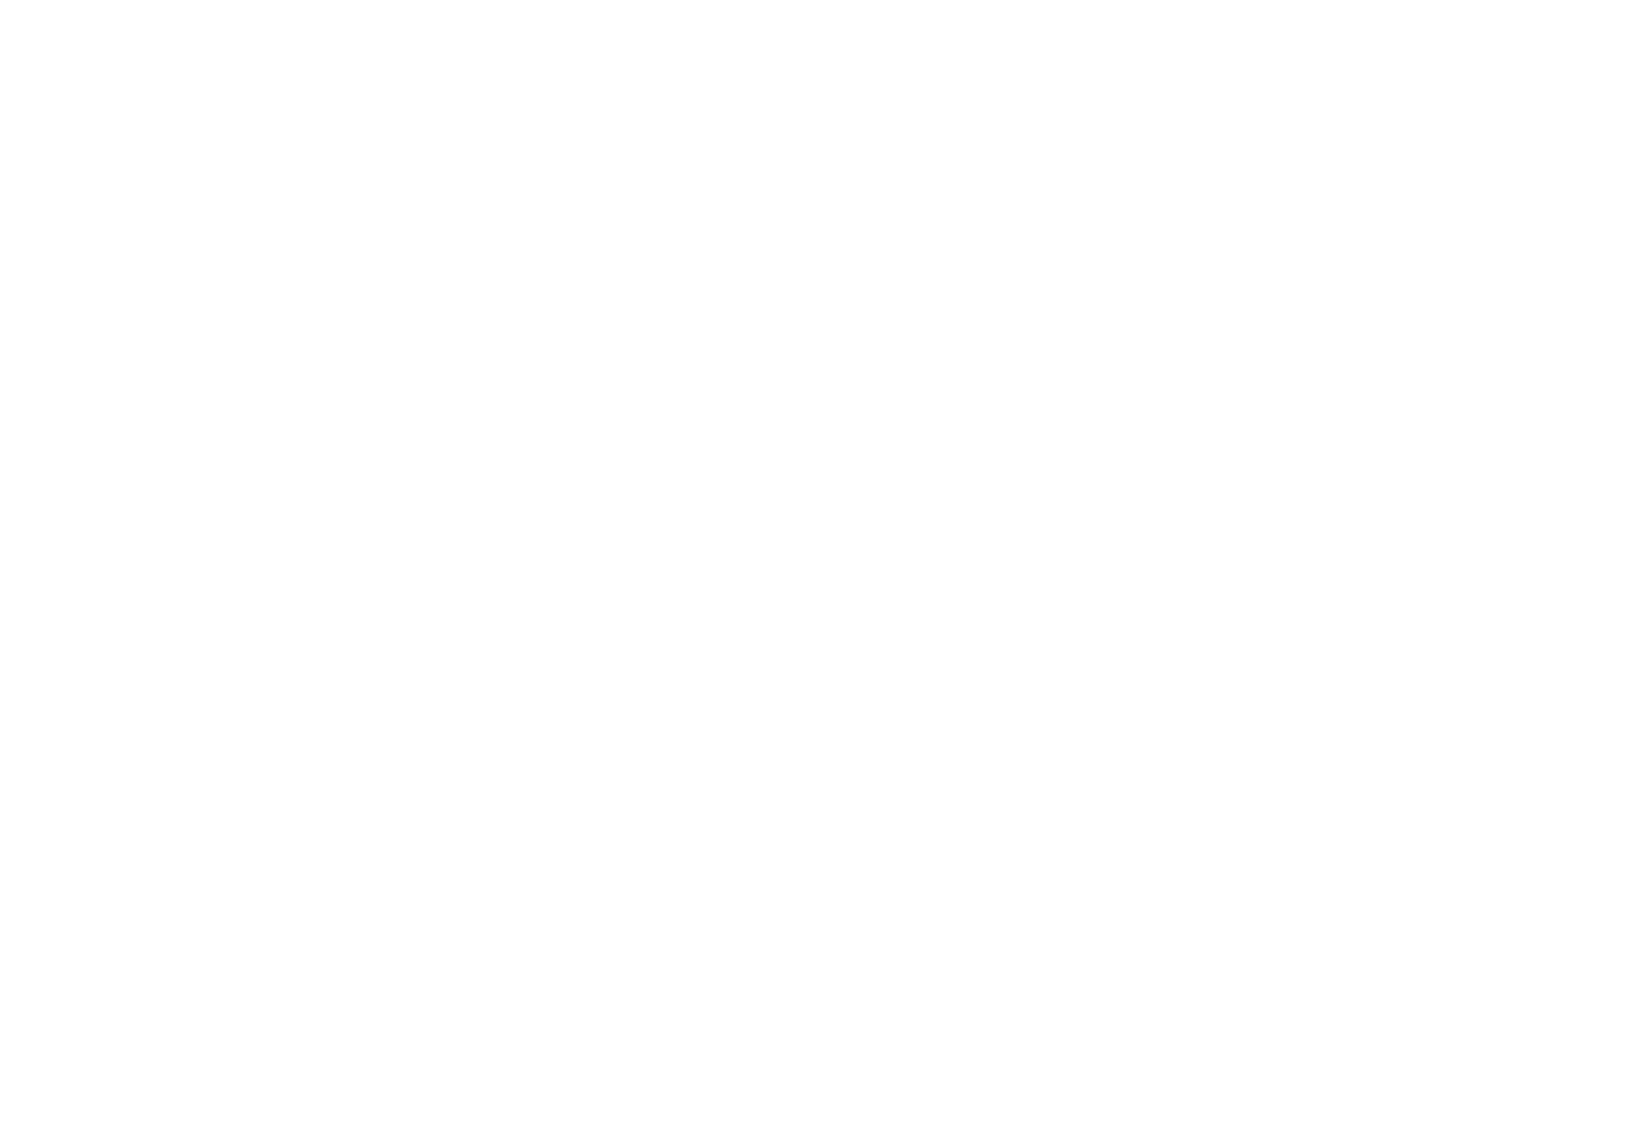 NAHB Logo Small Reversed 